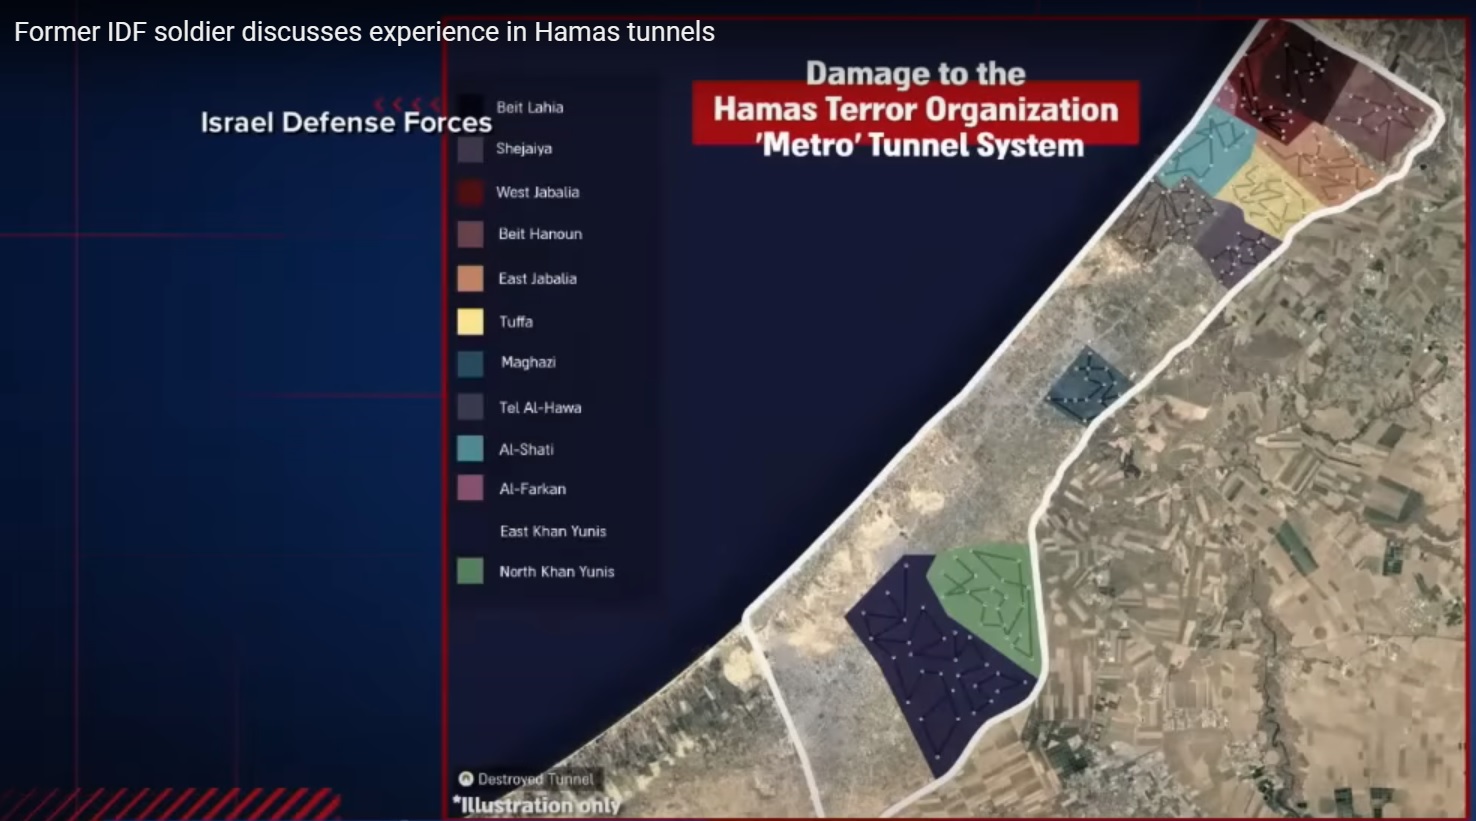 HamasTunnelSystem.jpg